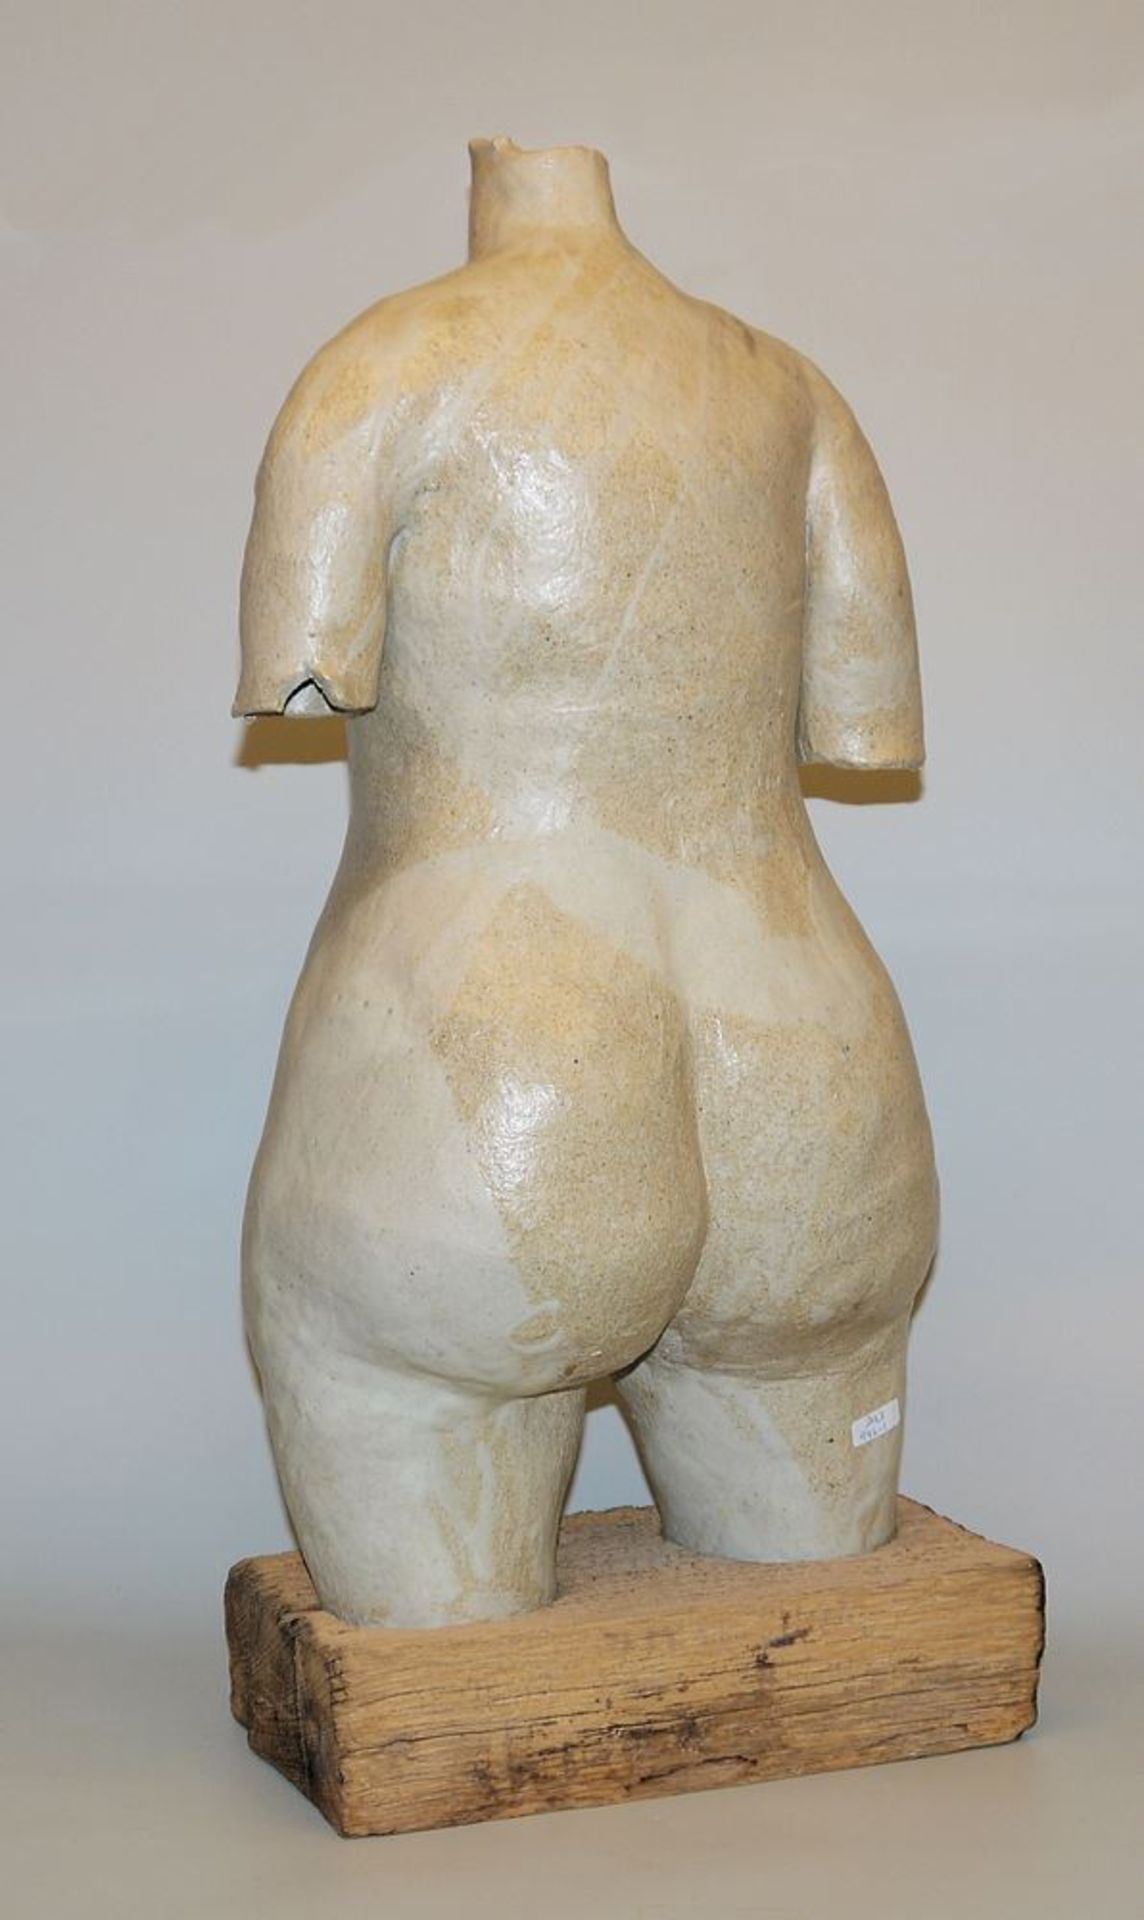 Maike Orlob-Rothweiler, large ceramic sculpture "Torso" around 1985 - Image 2 of 2